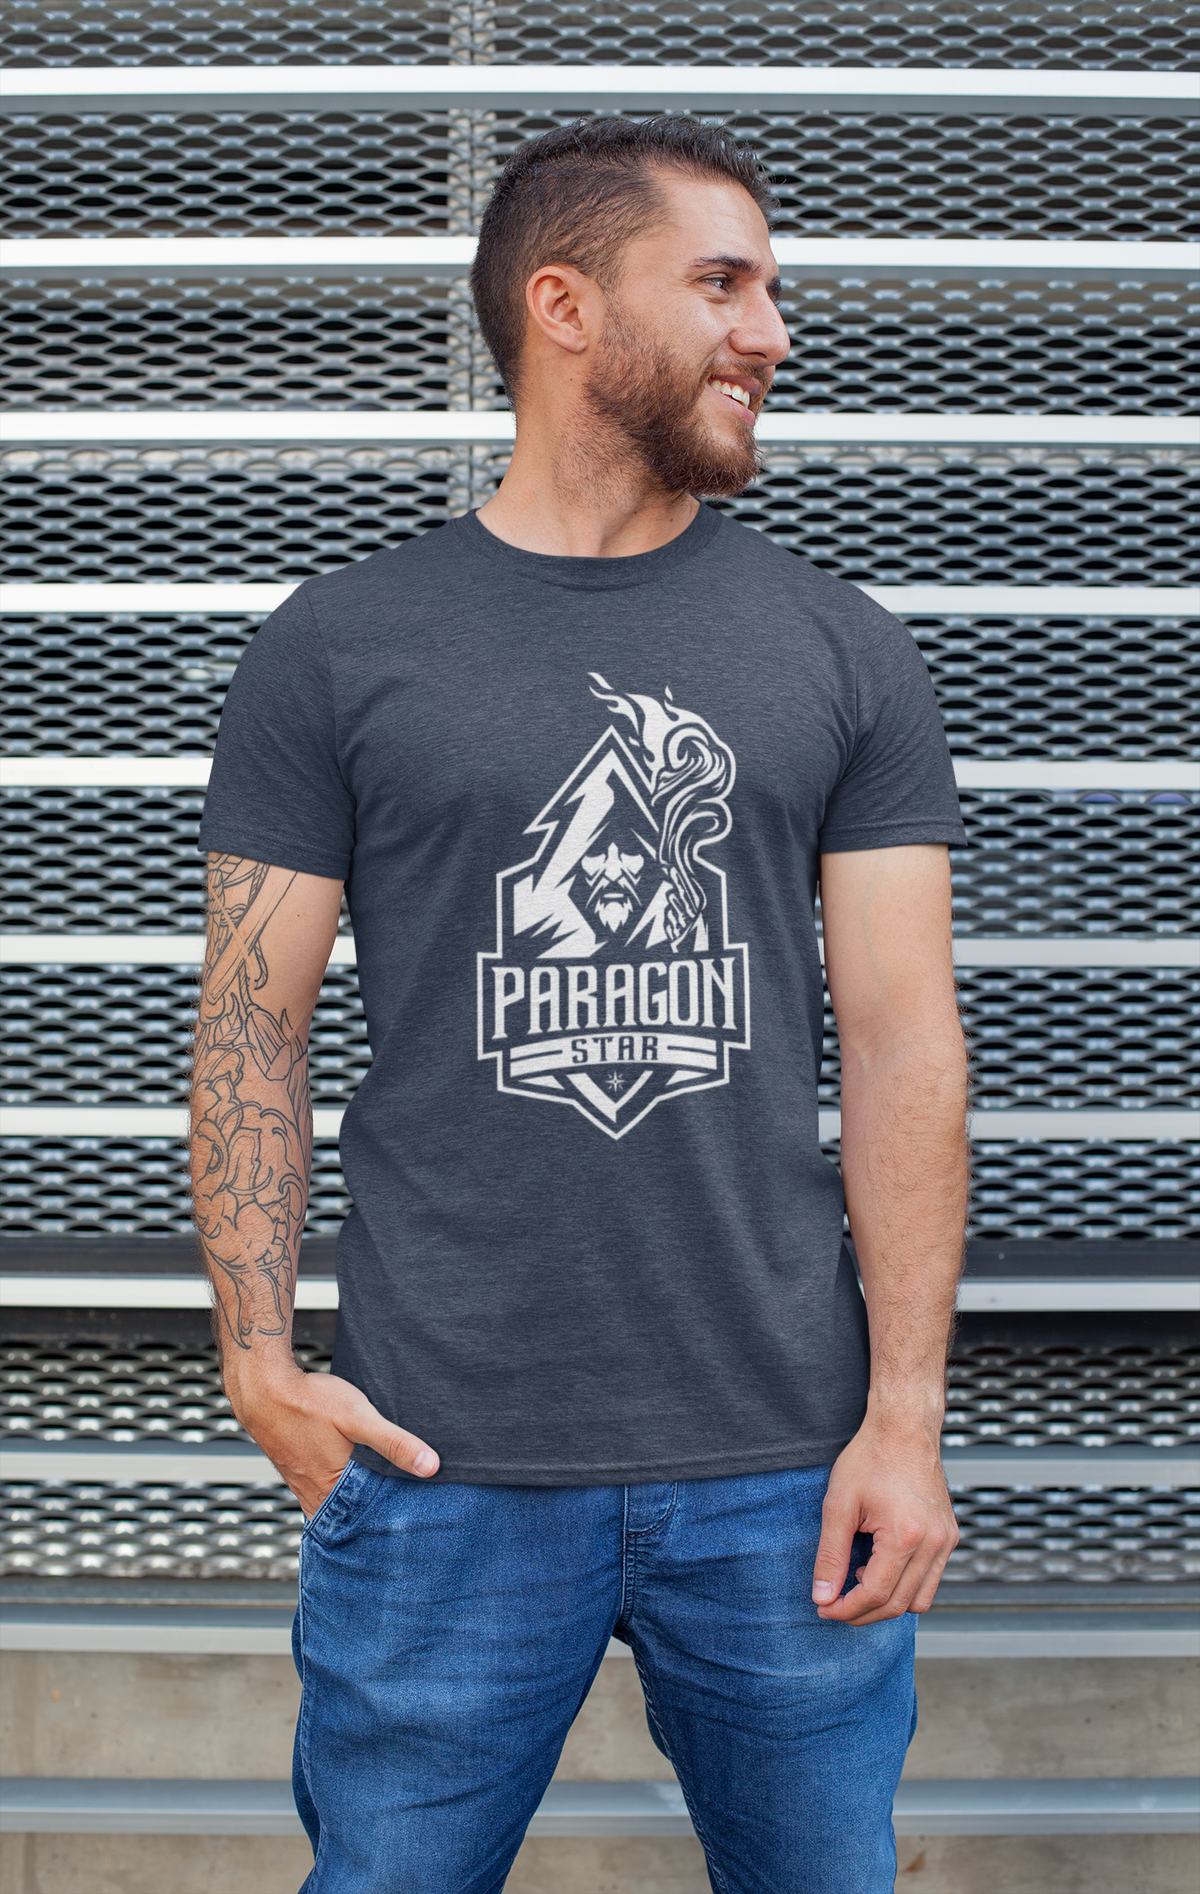 Paragon Star Wizard Themed T Shirt - Warlock I Sorcerer I Mage